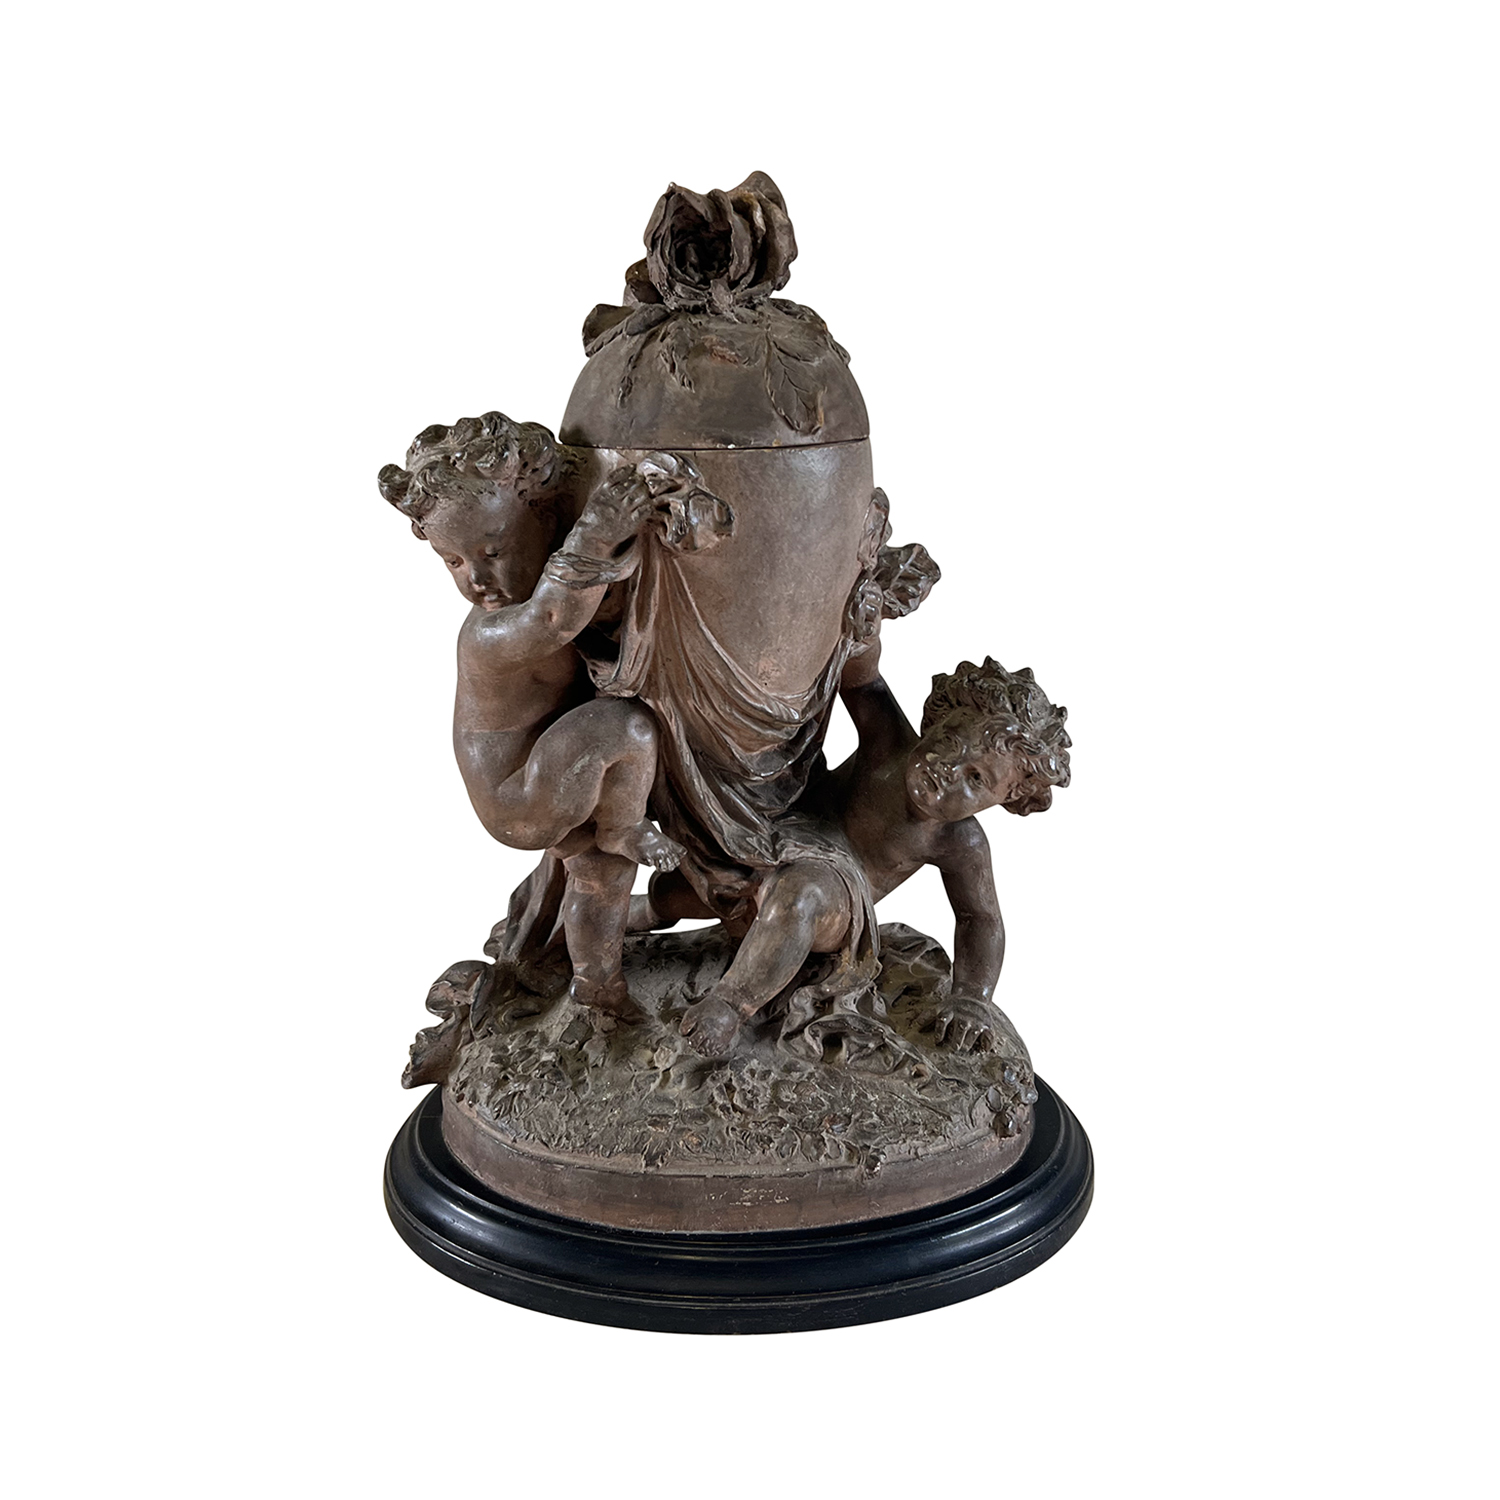 19th Century French Antique Terra Cotta Cherub Figurine Statuette Objet d’Art